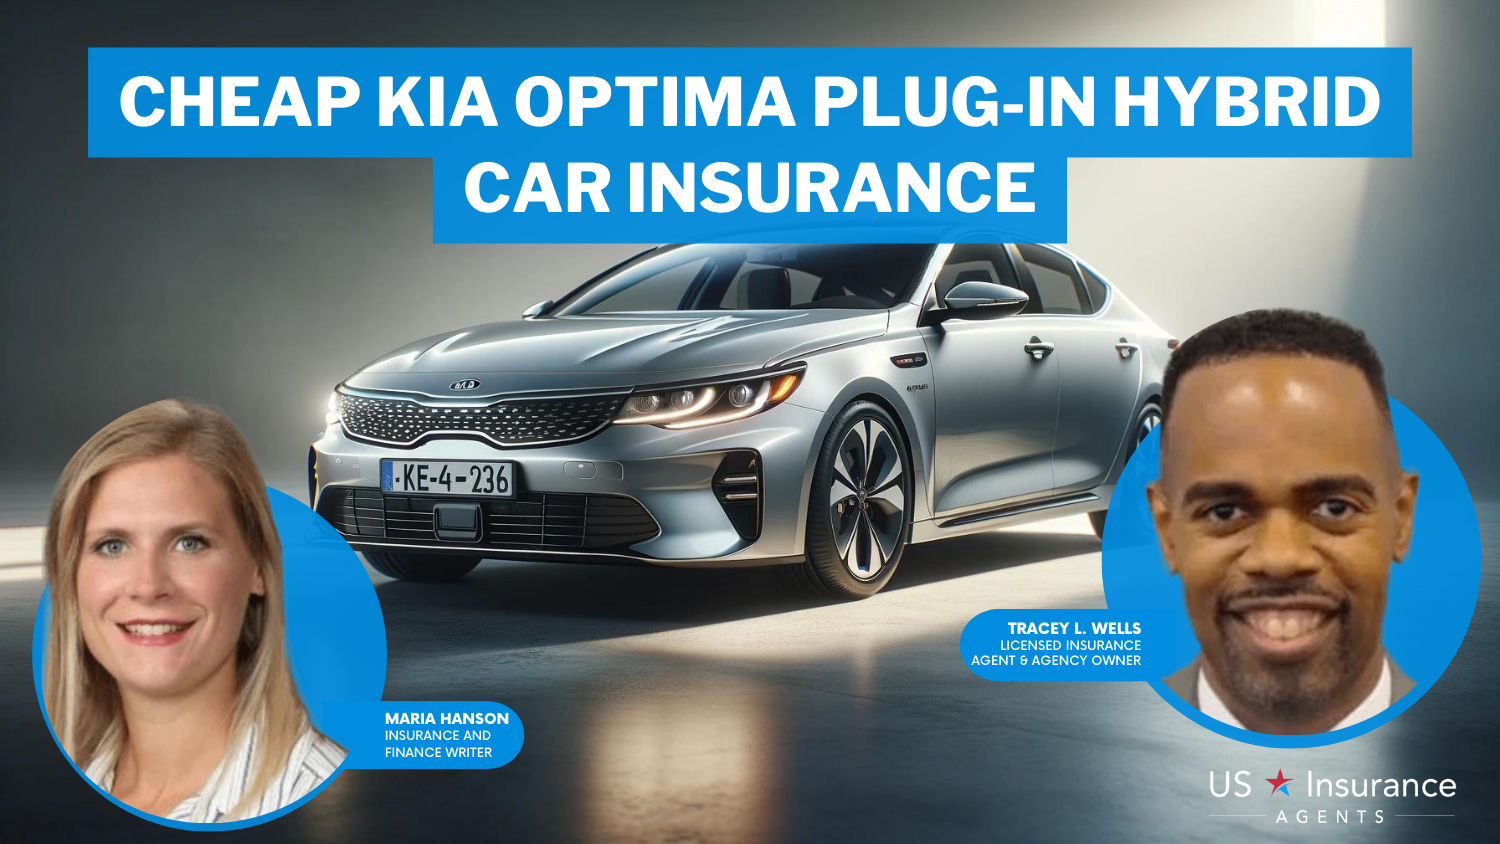 Cheap Kia Optima Plug-in Hybrid Car Insurance: Progressive, Travelers, and Safeco